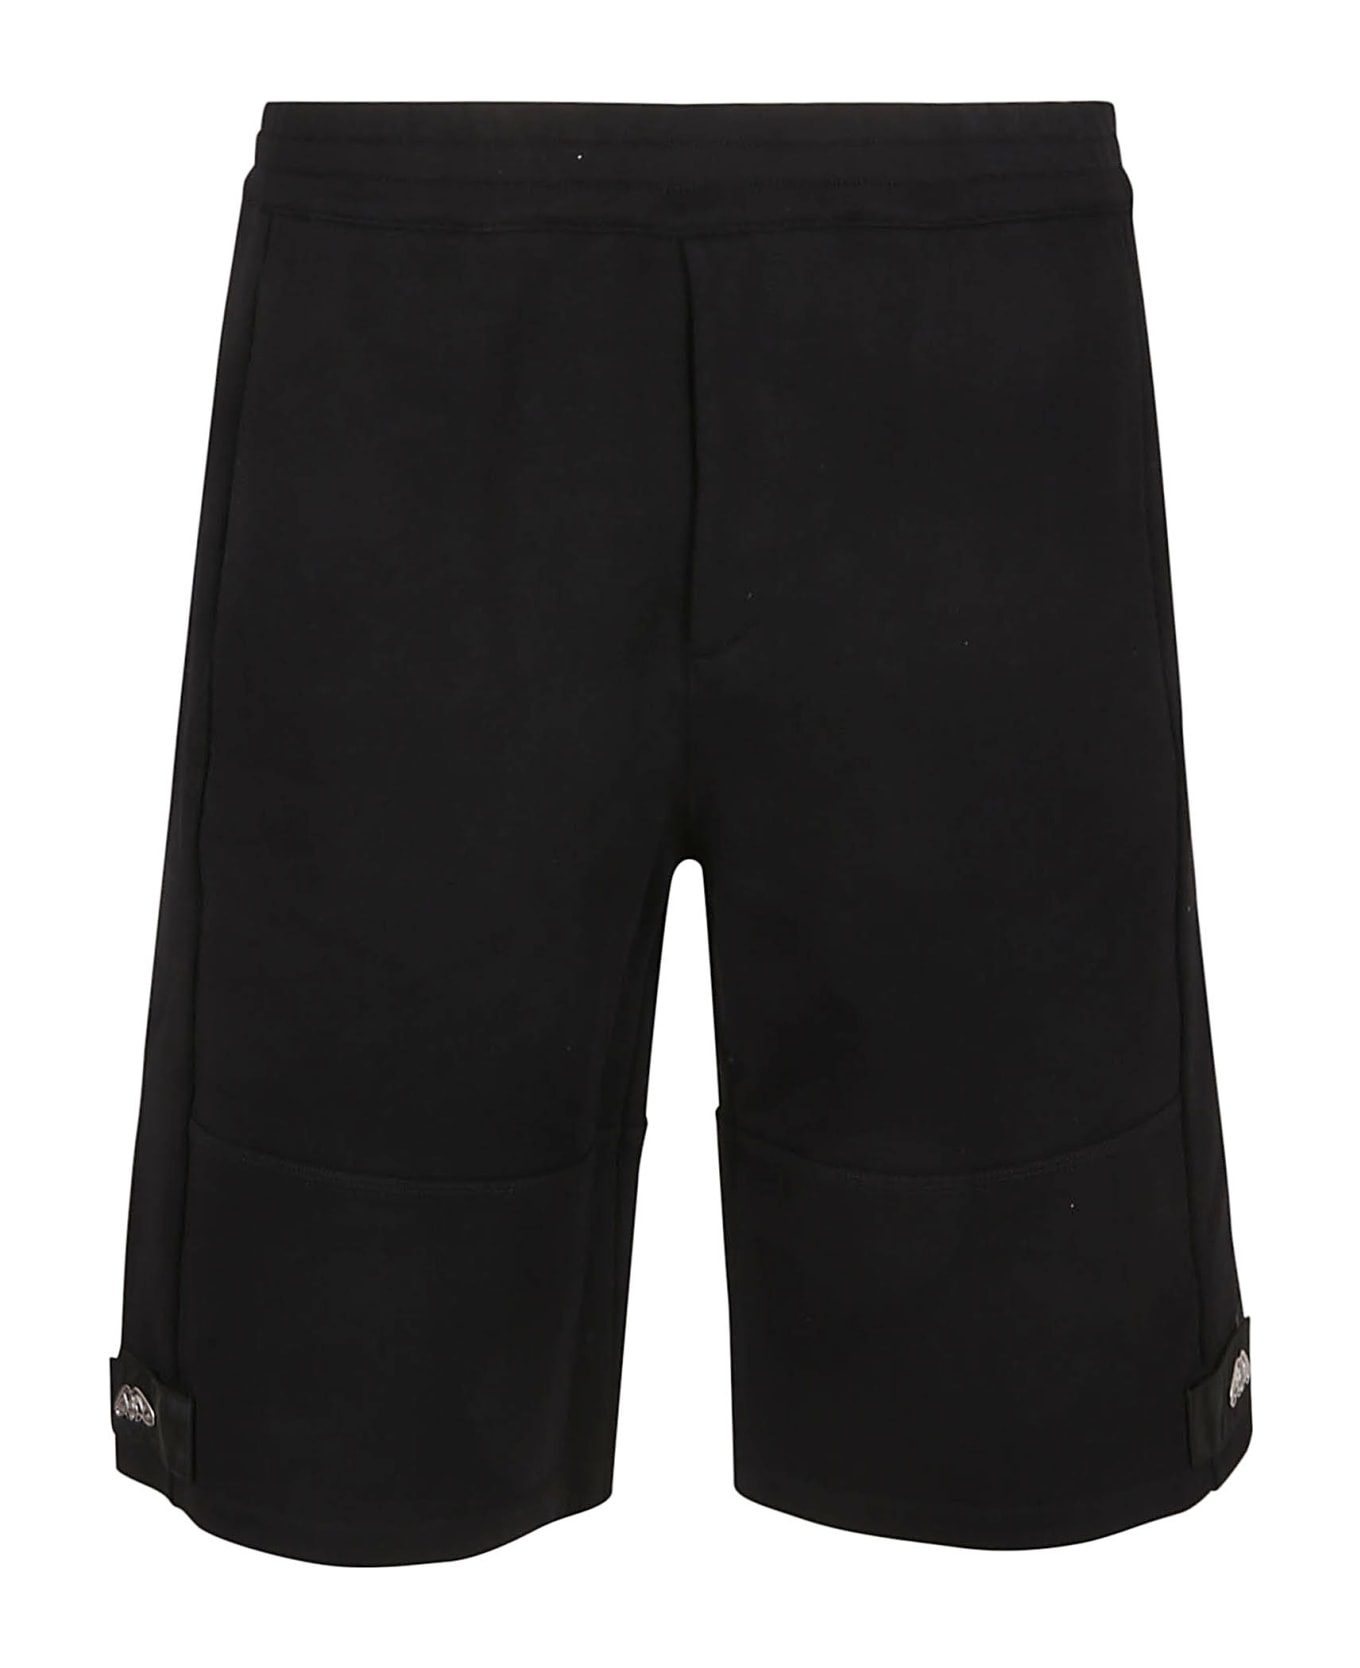 Alexander McQueen Shorts - Black